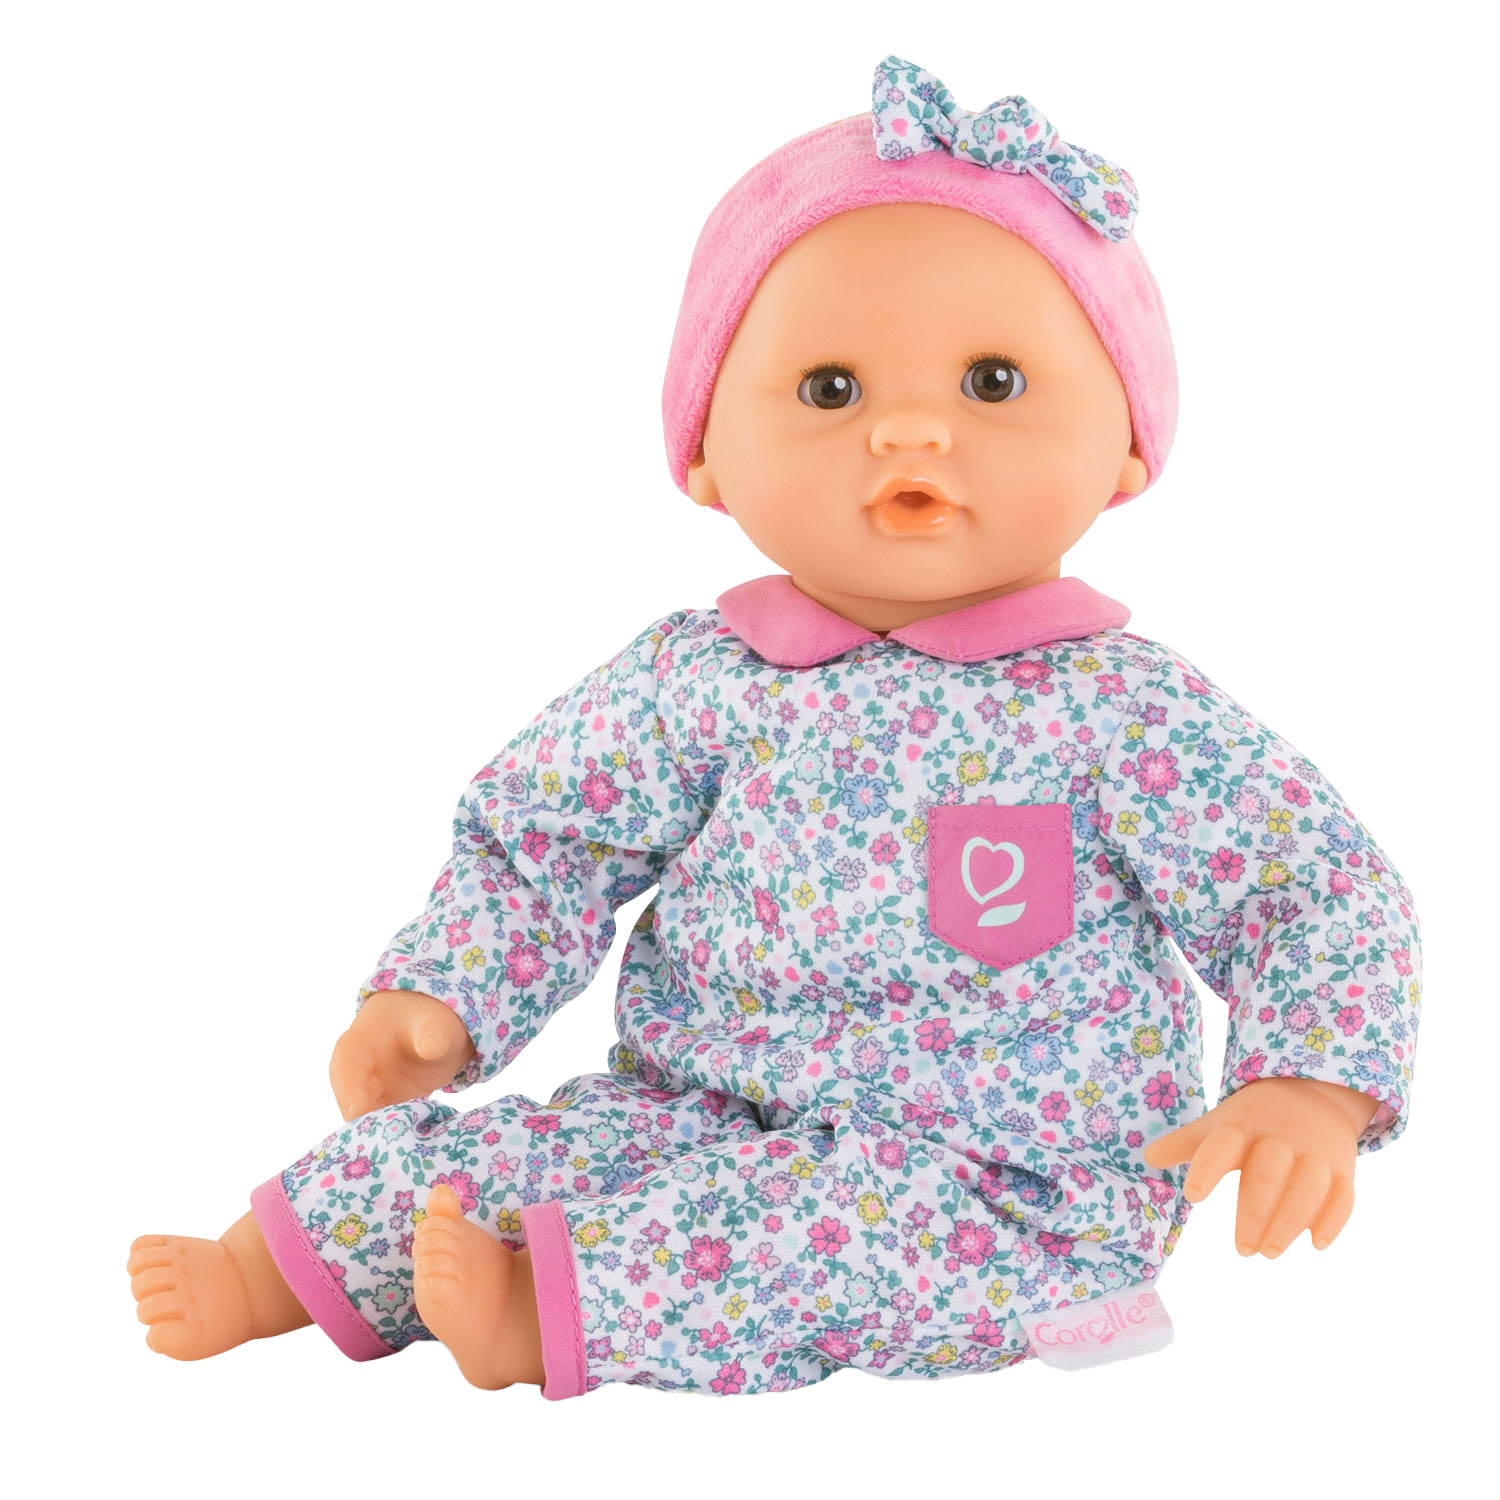 Corolle Mon Premier Poupon Calin Baby Doll - Calin Capucine, 30 cm